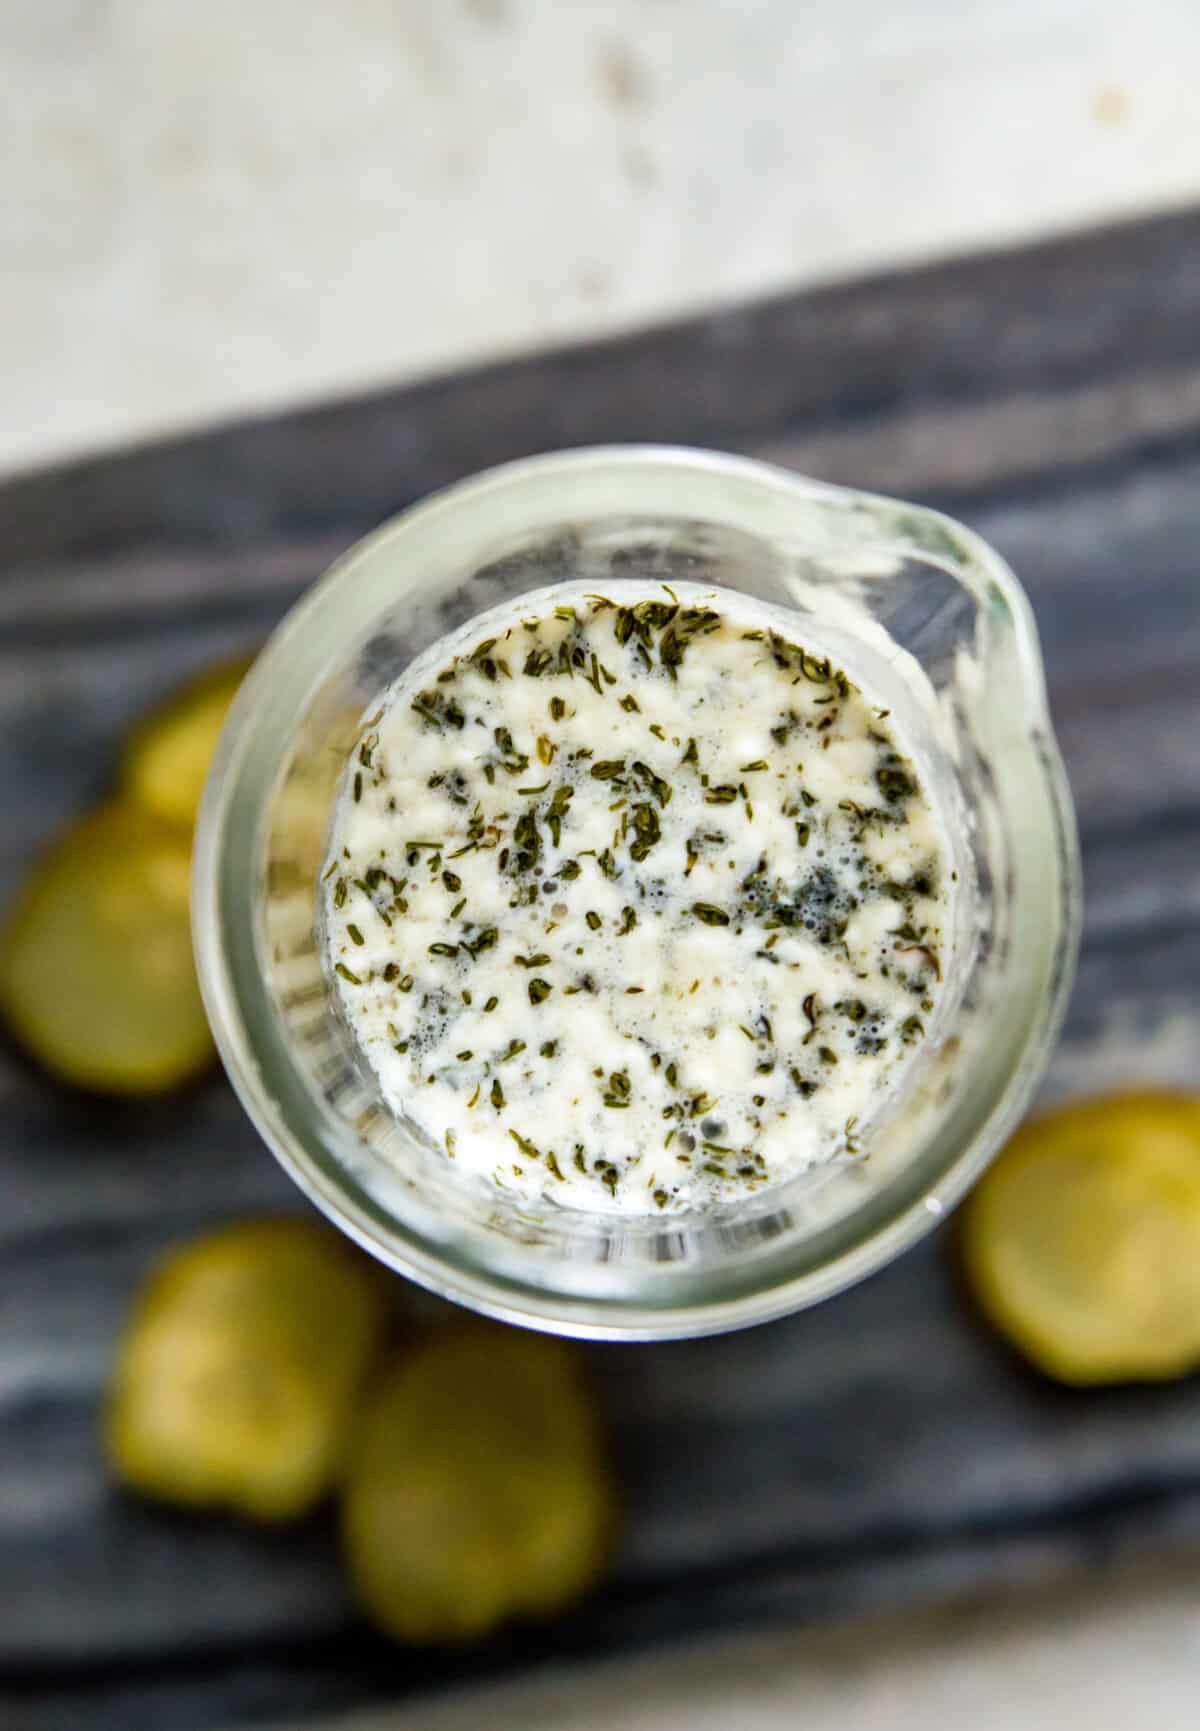 A jar of dill pickle salad dressing on a cutting board.